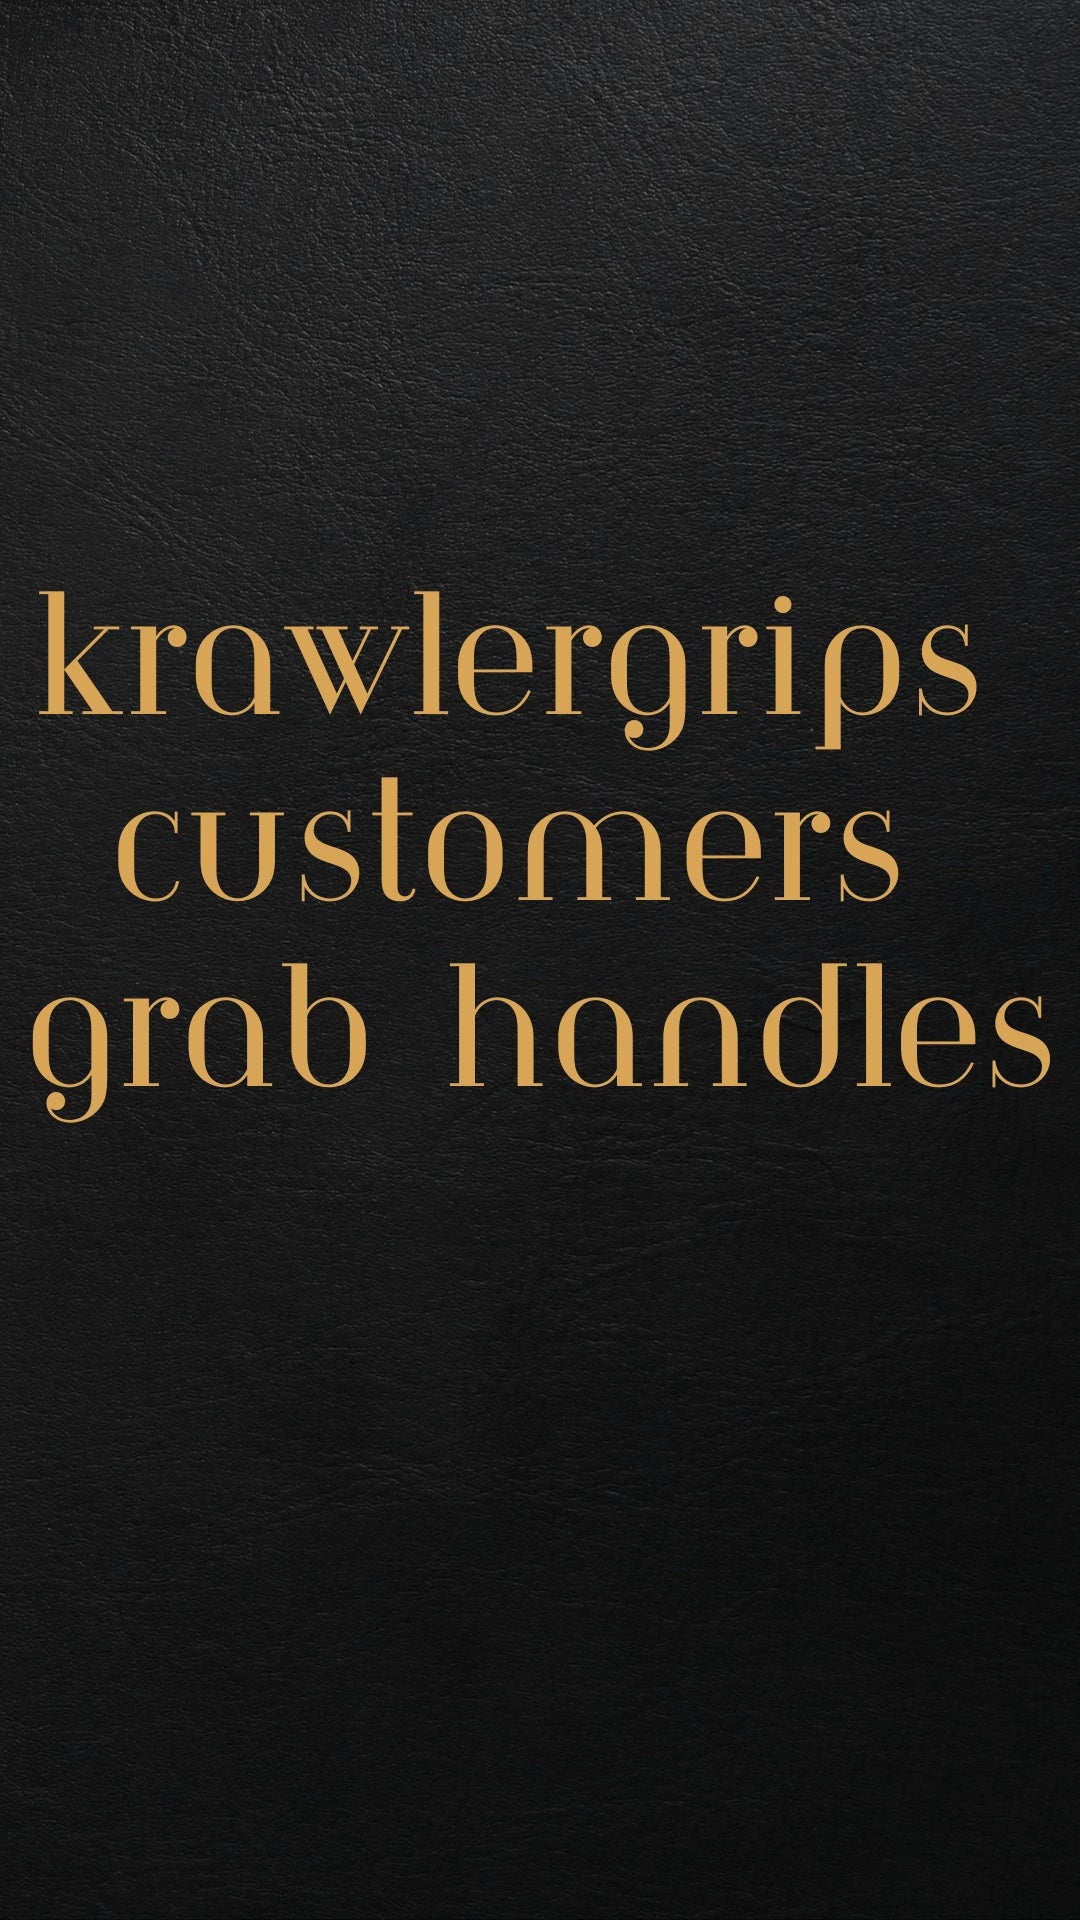 Customer 4x4 grab handles